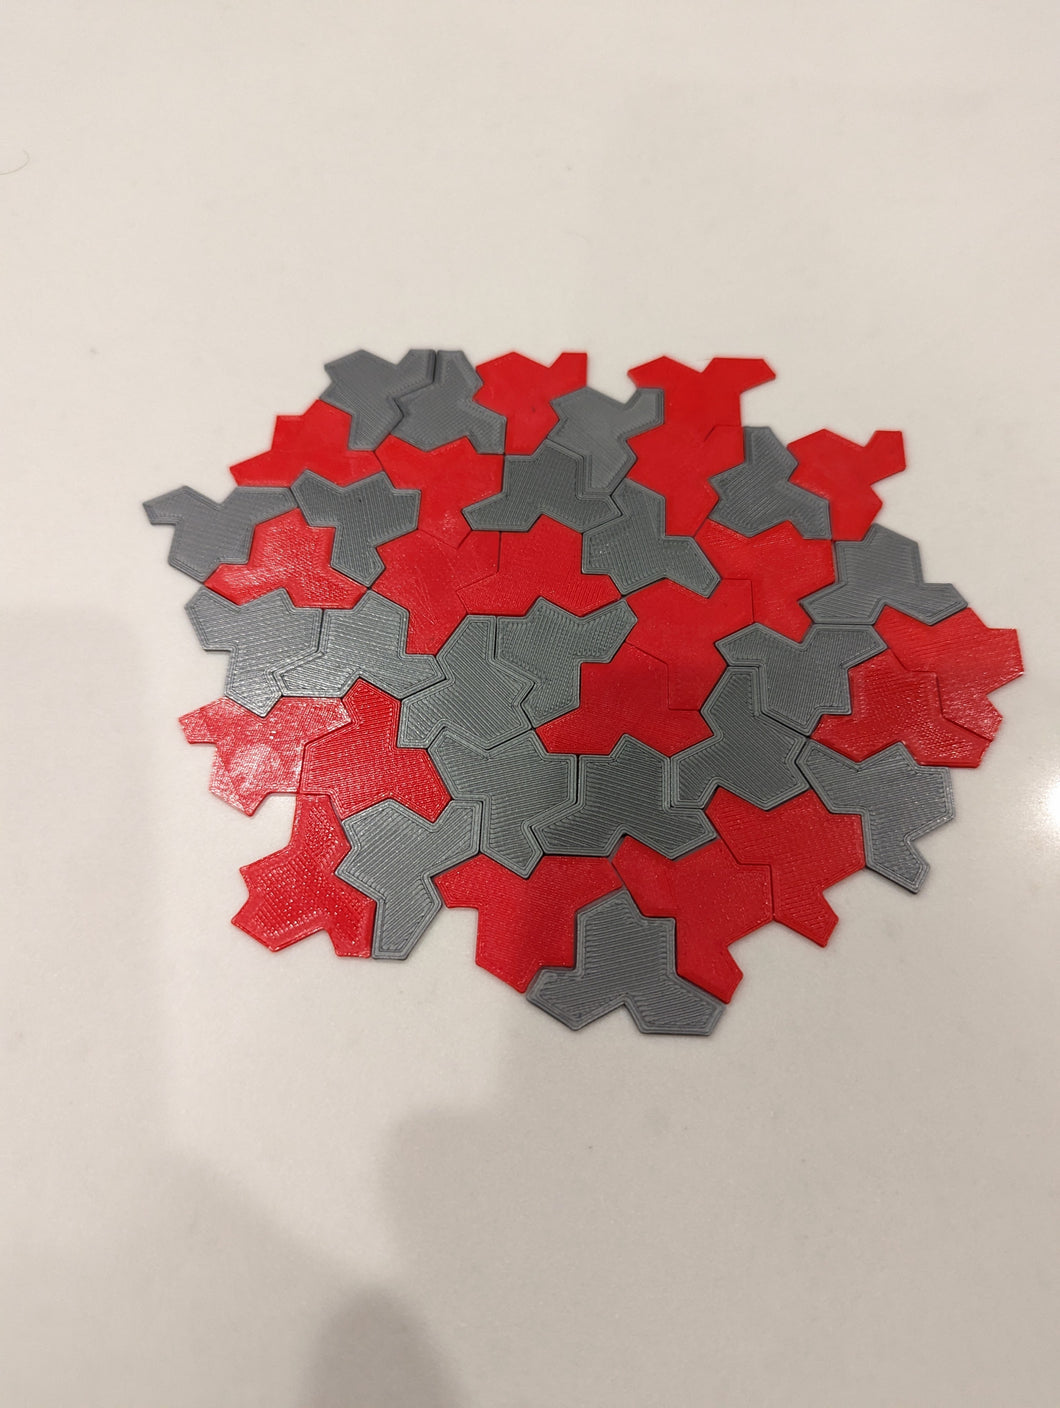 Einstein hat tile puzzle pieces set || math geometry problem solved